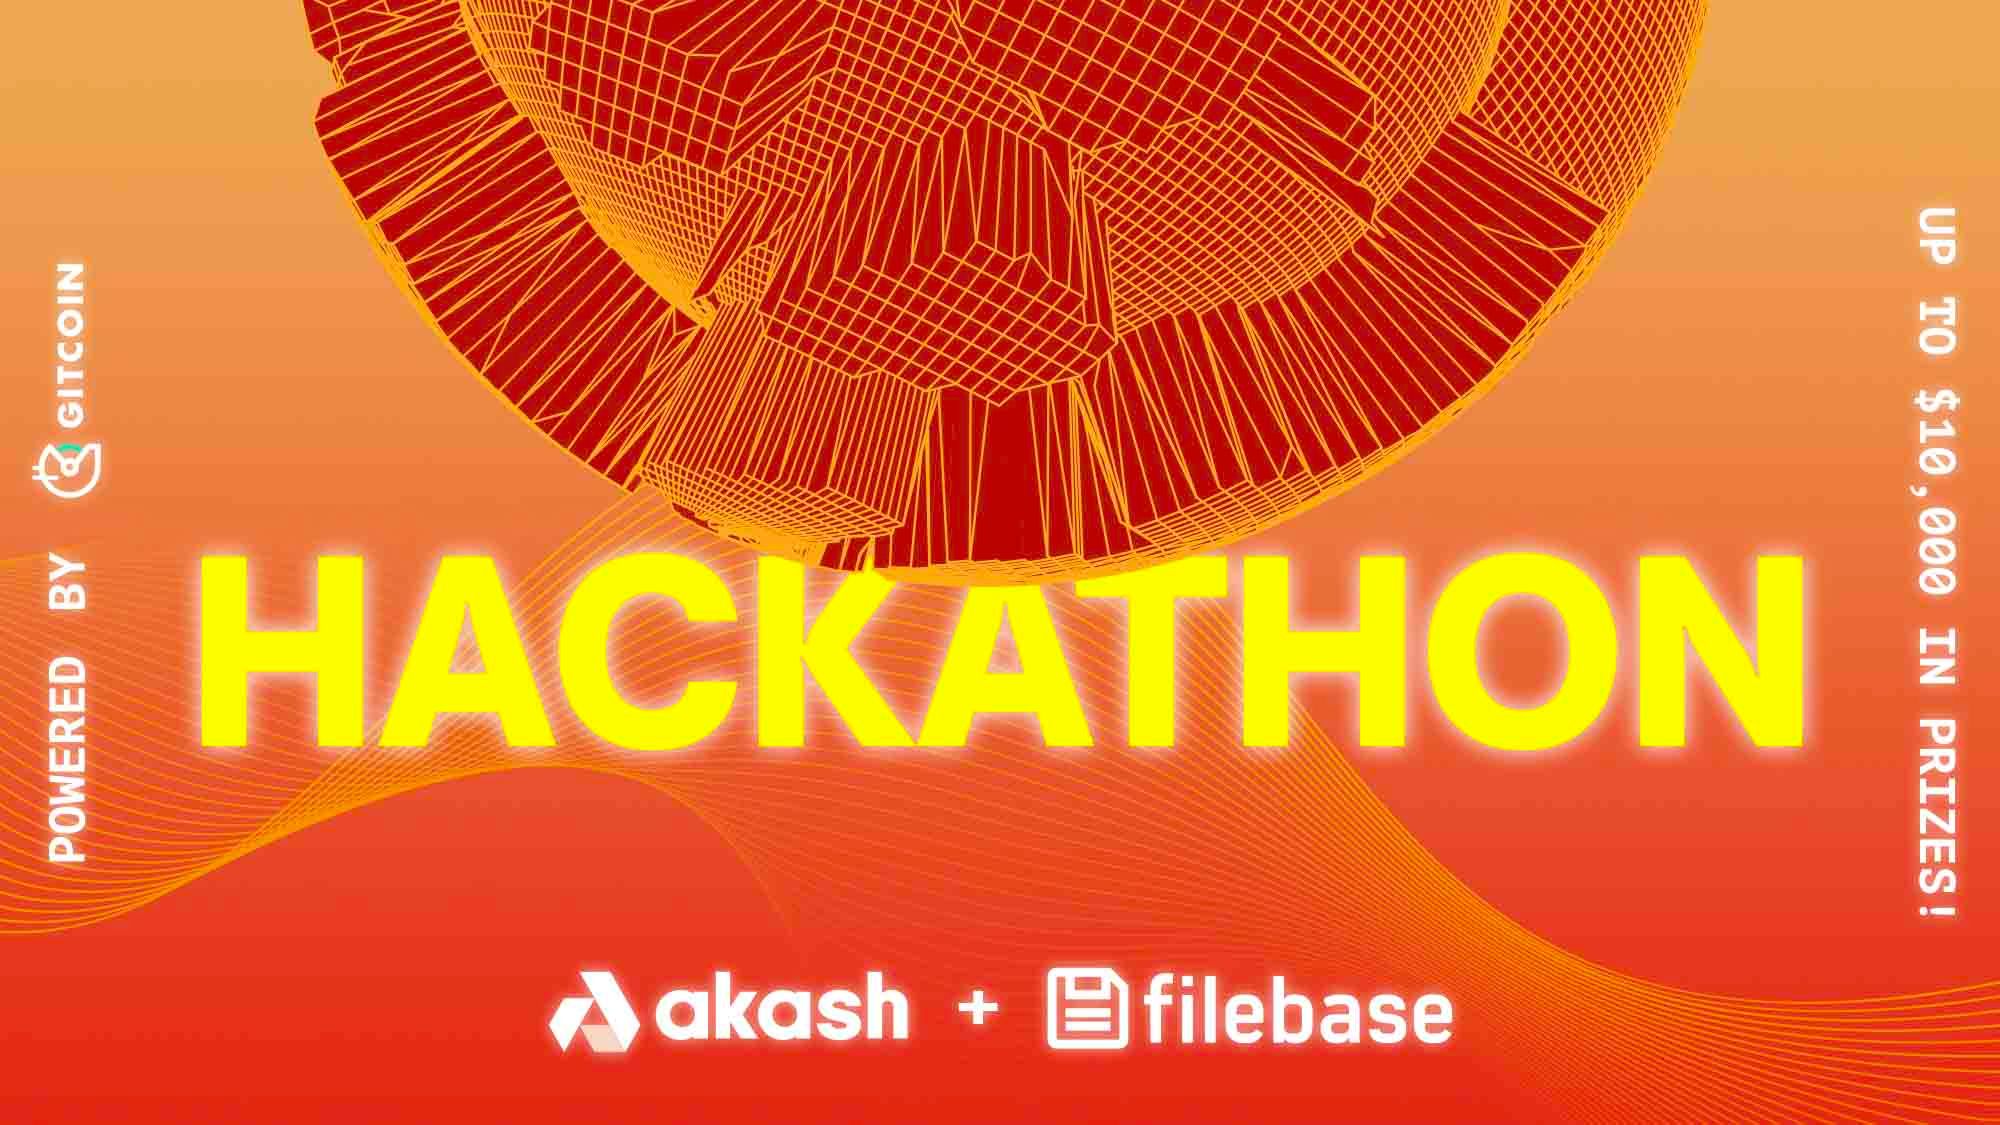 Filebase + Akash Hackathon - Initial Project Showcase